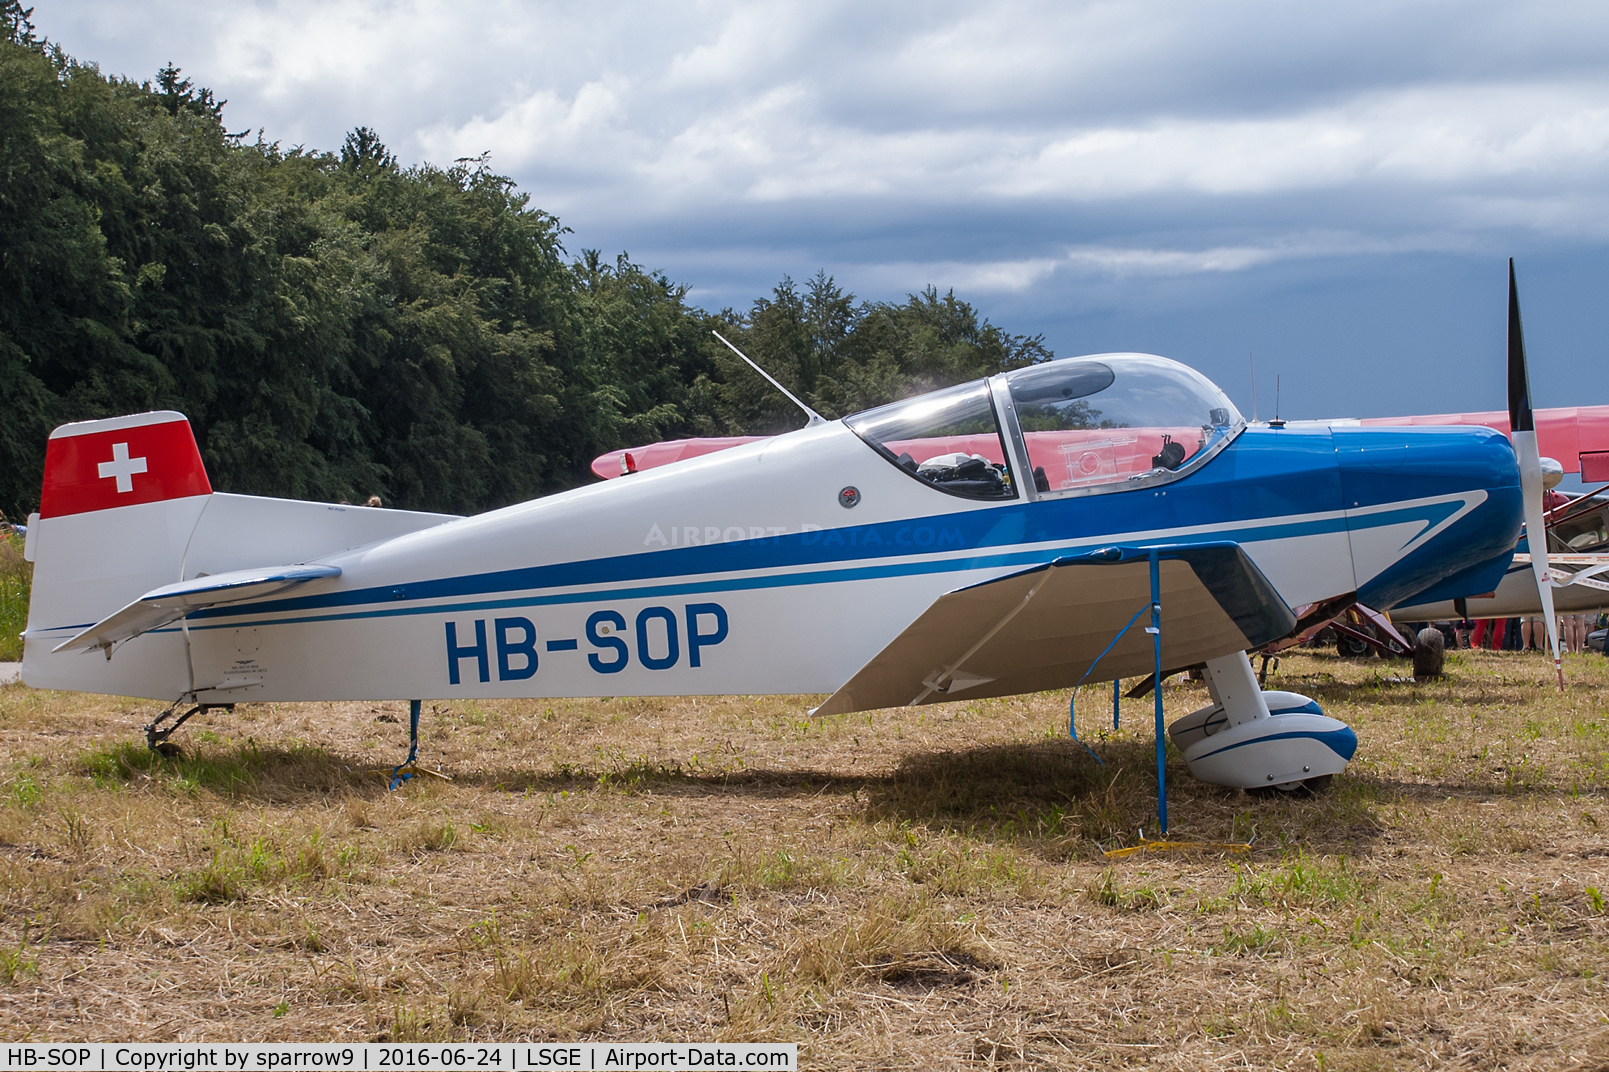 HB-SOP, 1958 Uetz Jodel D-11 C/N 931-13, Swiss-built Jodel D-11. First registered from 1958-09-27 until accident 1977-11-04. Rebuilt and reregistered 2013-01-25. Seen at RIO Ecuvillens.